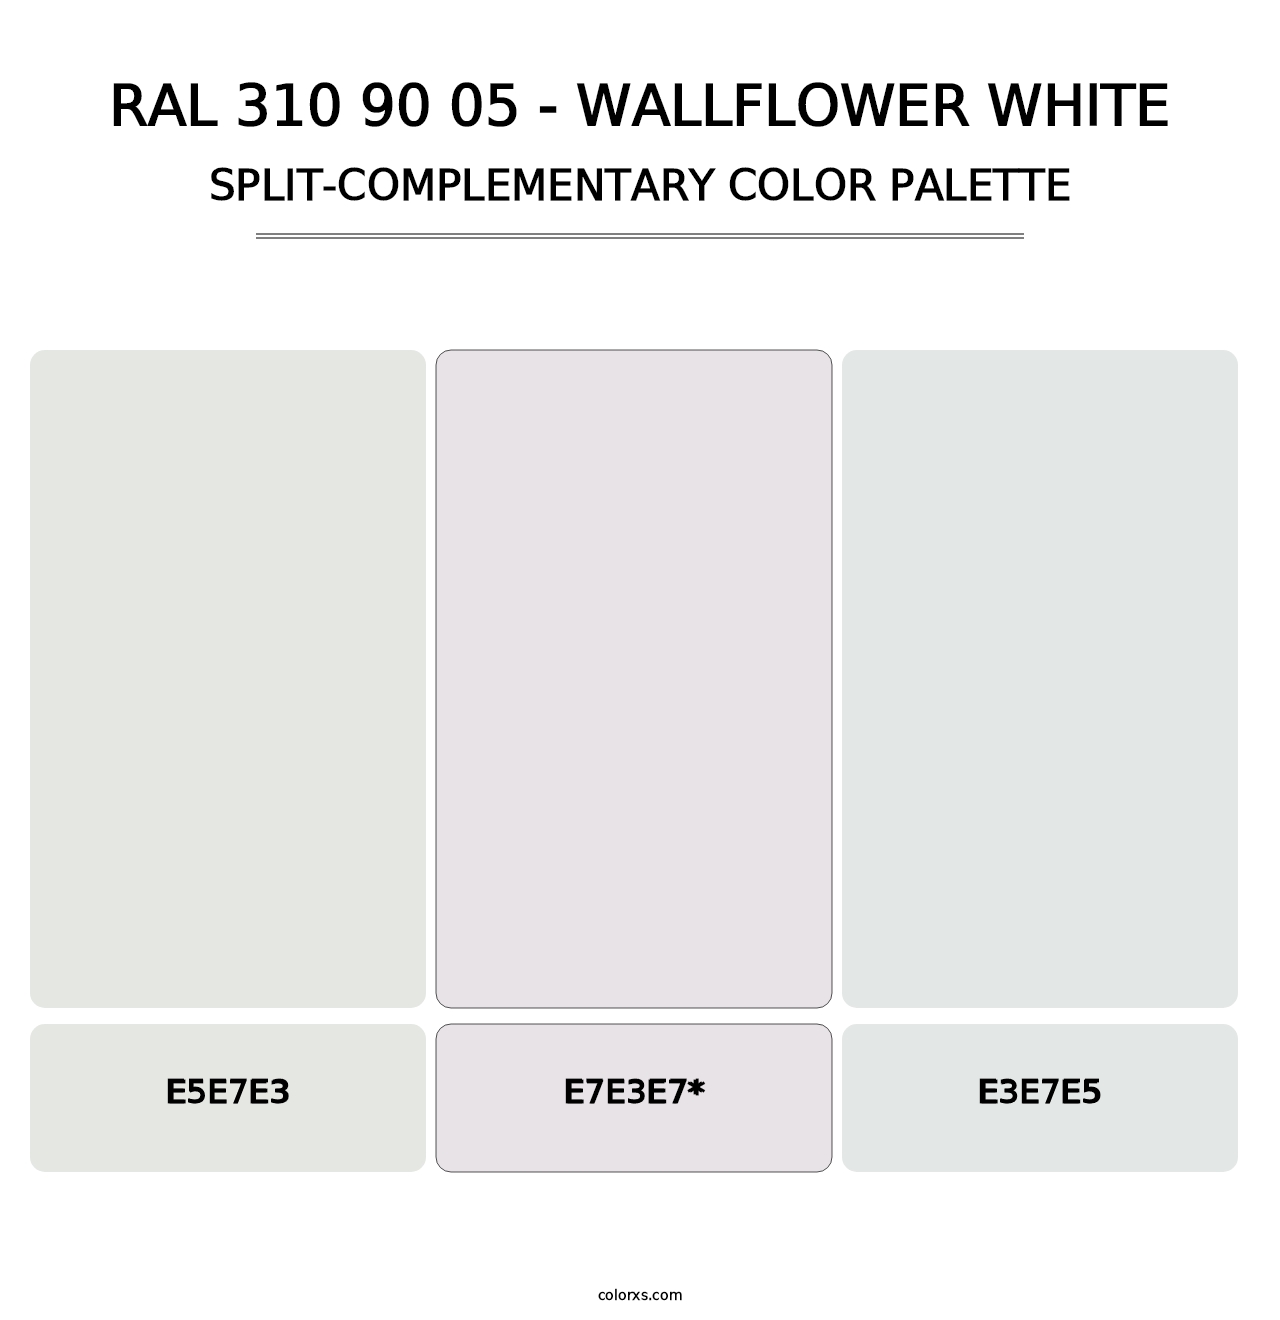 RAL 310 90 05 - Wallflower White - Split-Complementary Color Palette